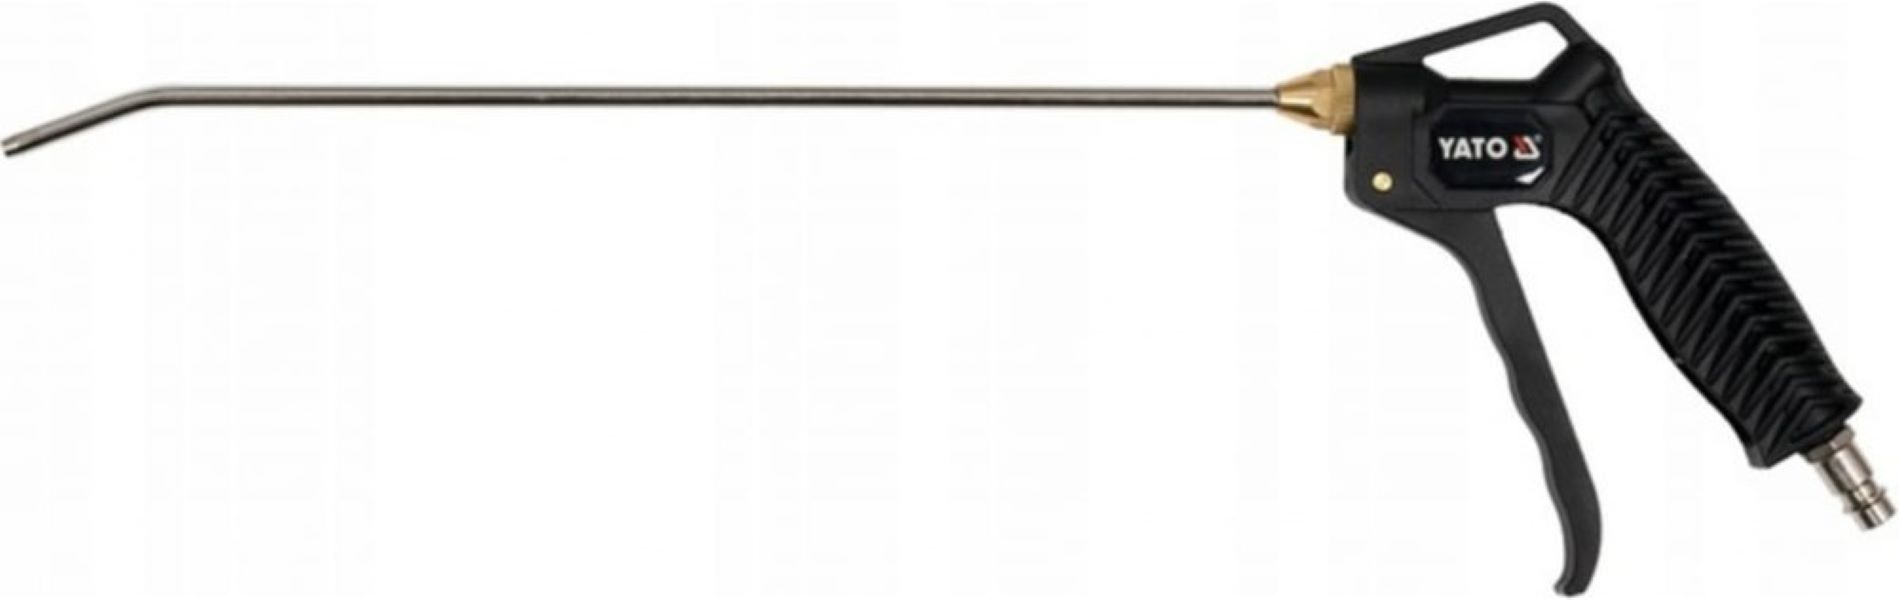 Пистолет Обдувочный 1/4 Inch, 8 Бар, 320 Мм, Блистер YATO арт. YT-23732 пистолет для нефтевания yato